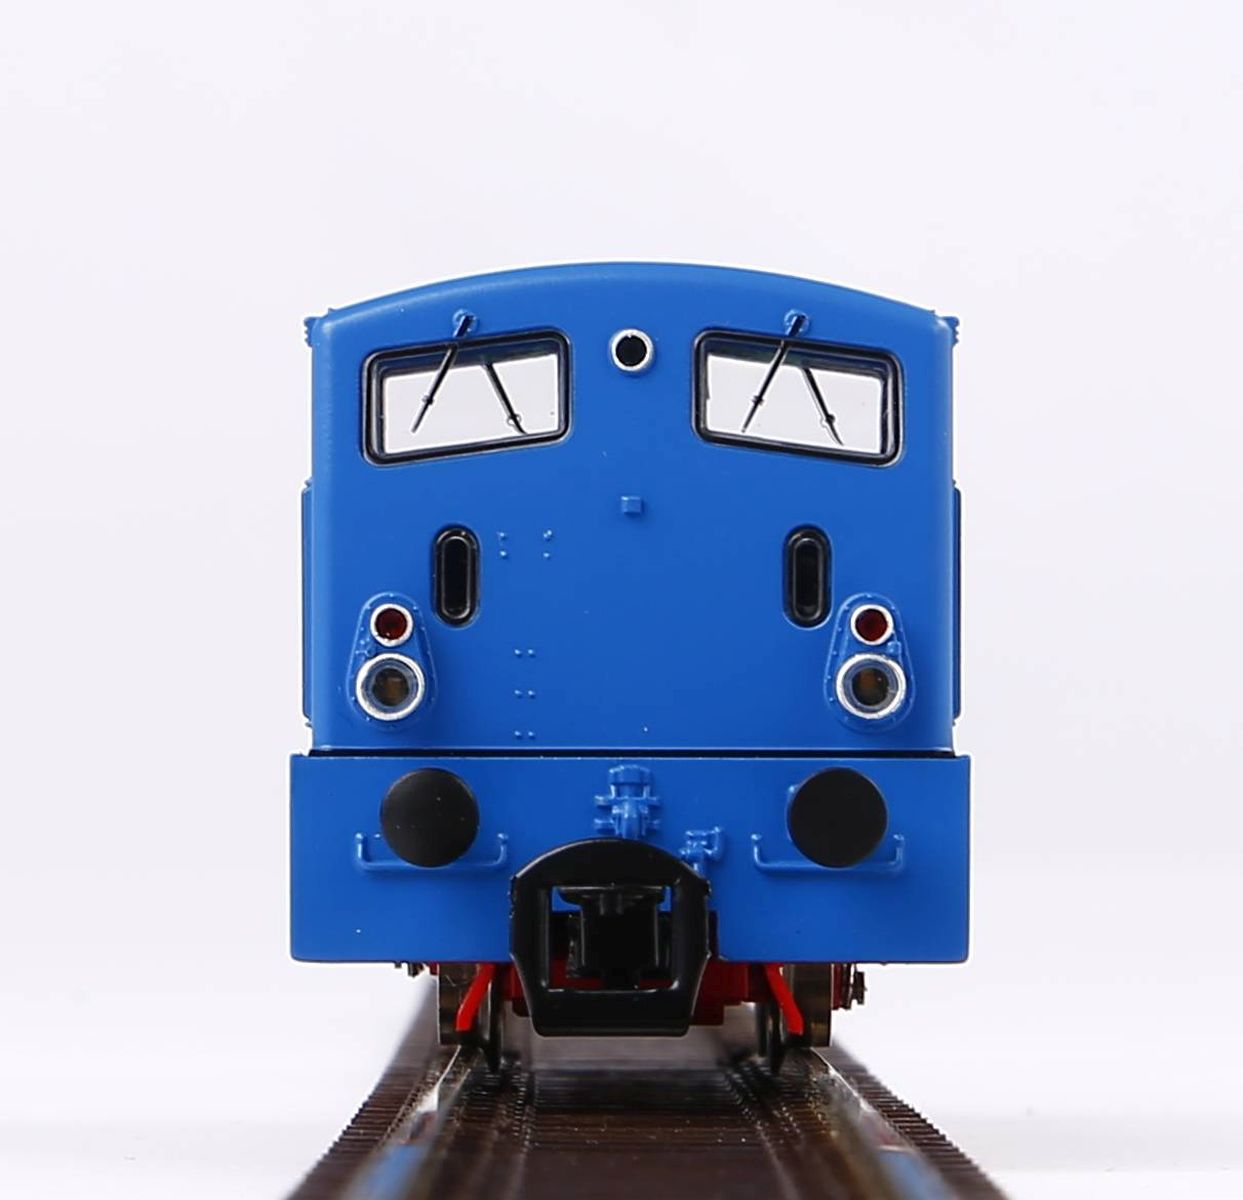 Piko 47308 - Diesellok V 15, DR, Ep.III, blau